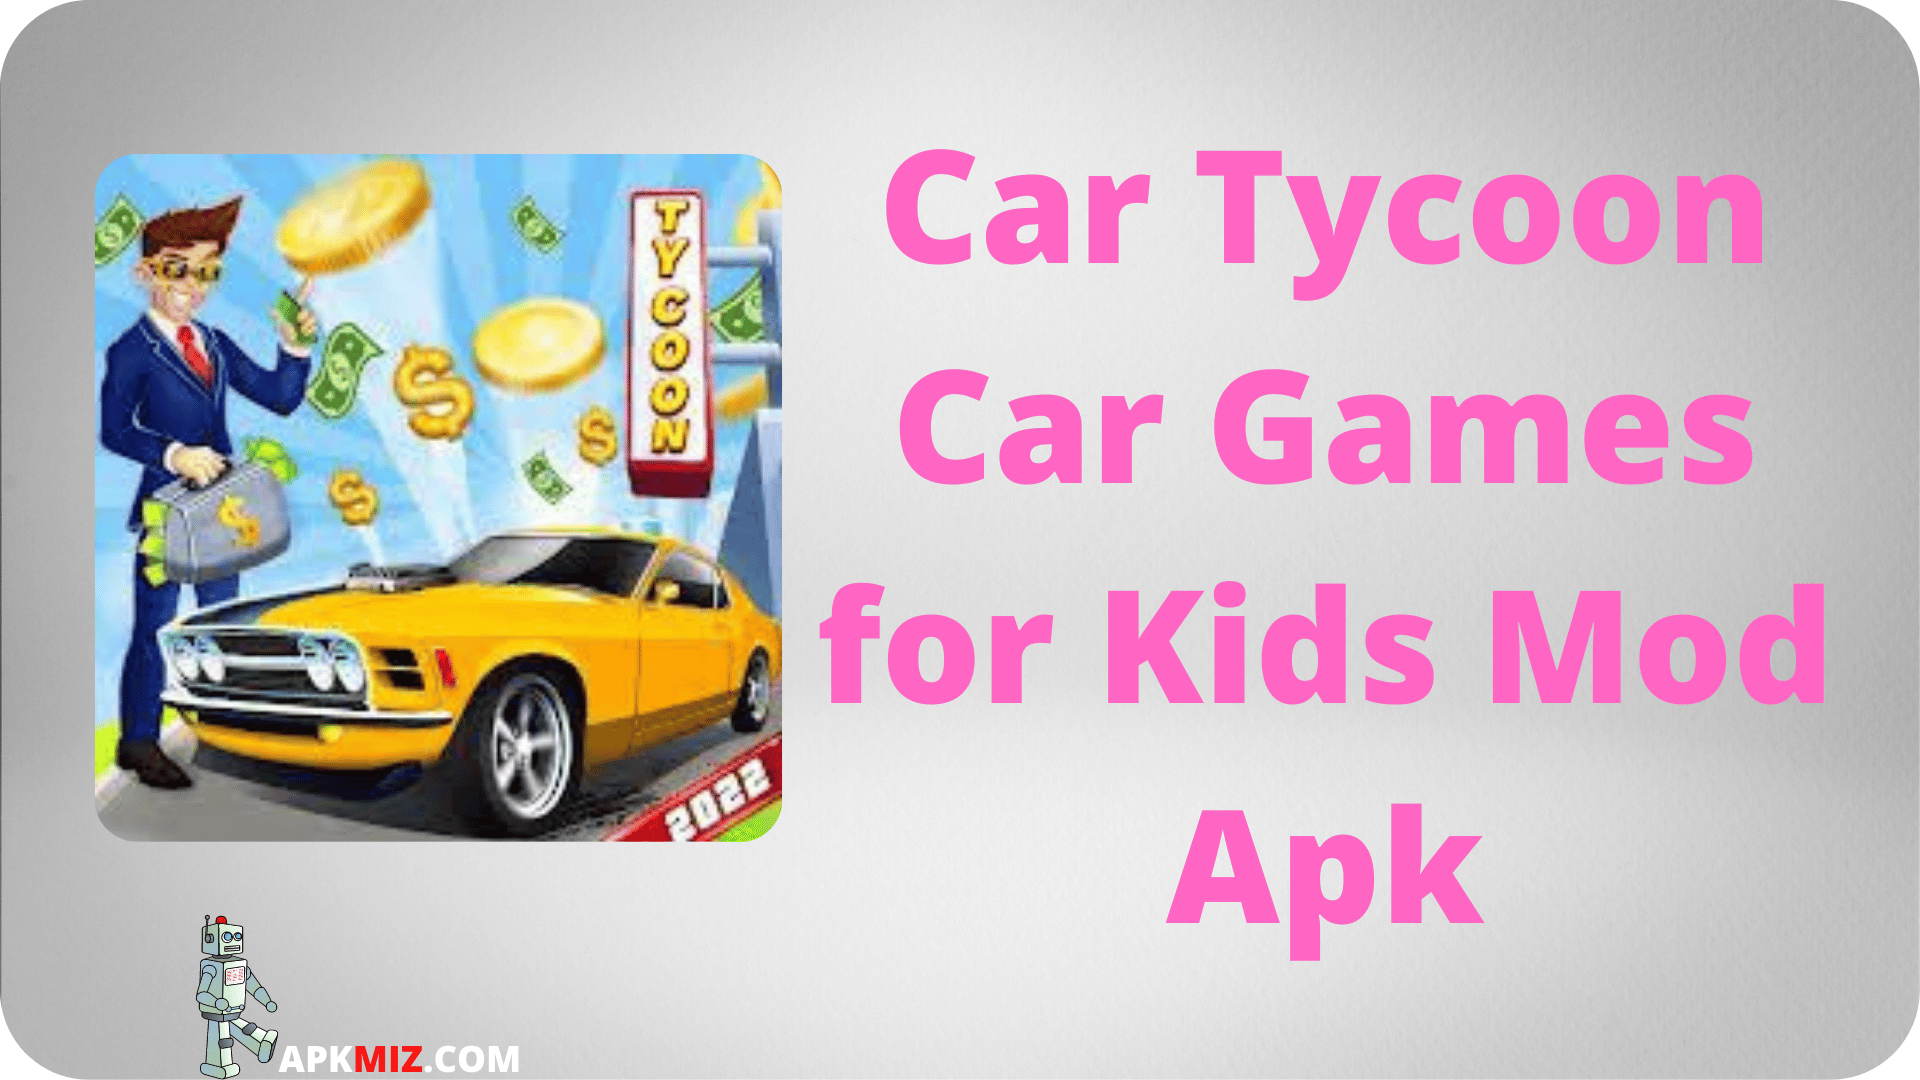 Car Tycoon Car Games for Kids Mod Apk